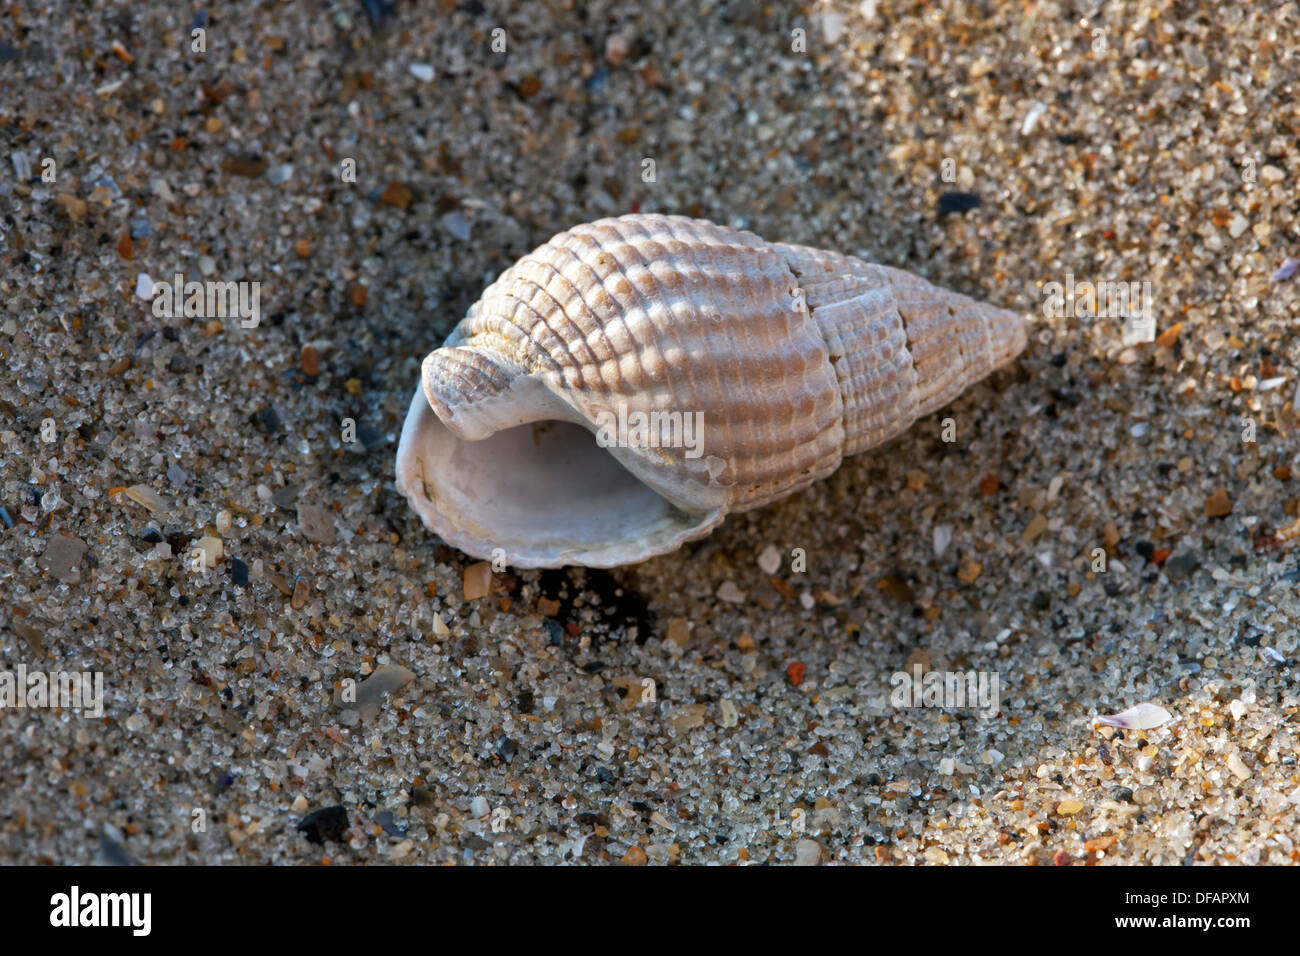 Netted dog whelk (Nassarius reticulatus / Hinia reticulata) on beach along the North Sea coast Stock Photo